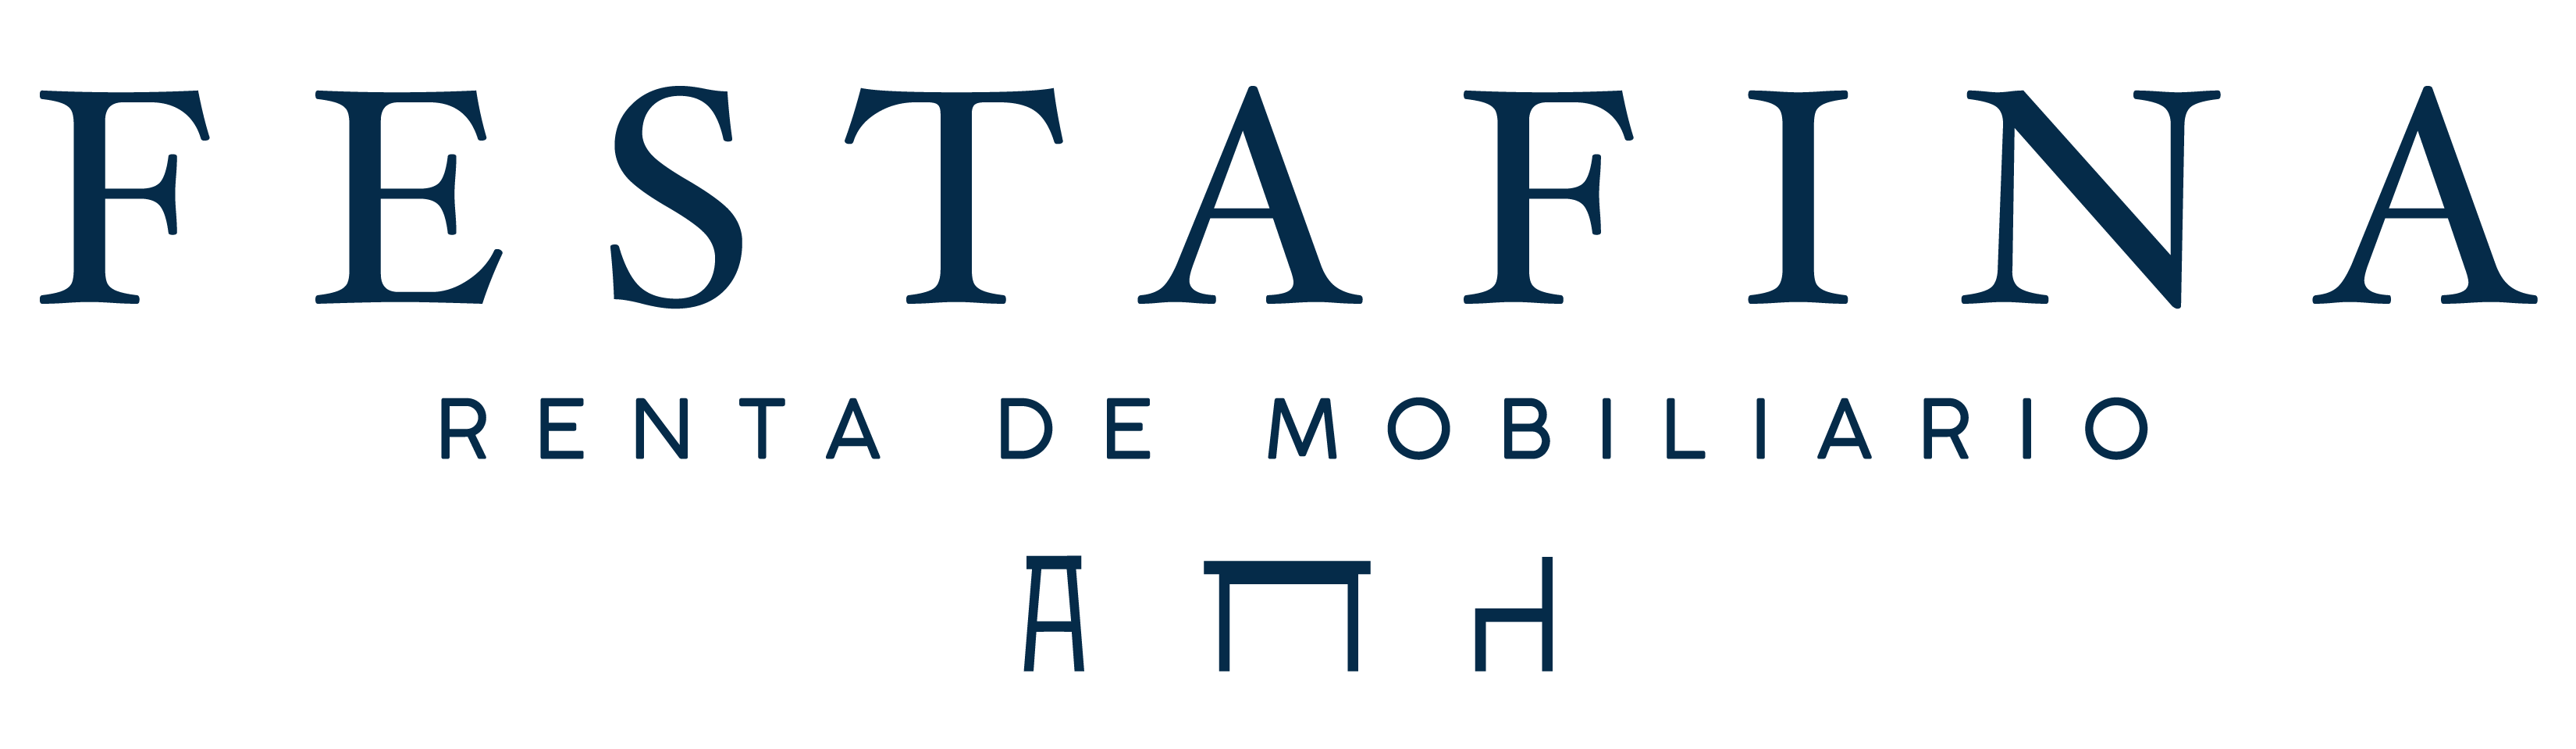 Logotipo Festafina